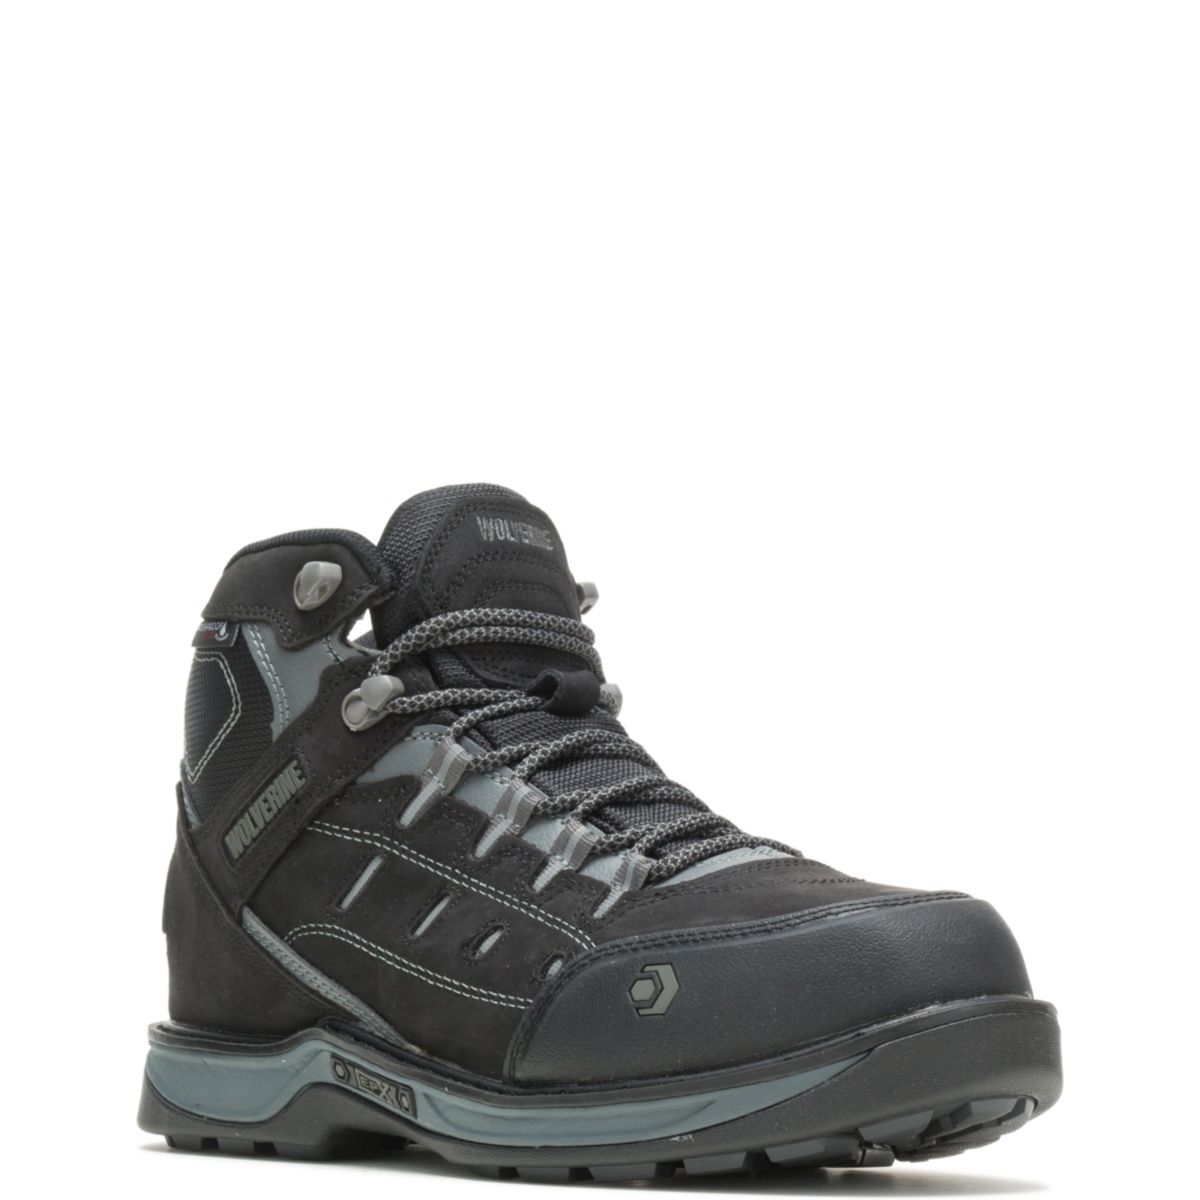 WOLVERINE Men's Edge LX Waterproof CarbonMAX® Composite Toe Work Boot Black/Grey - W10553